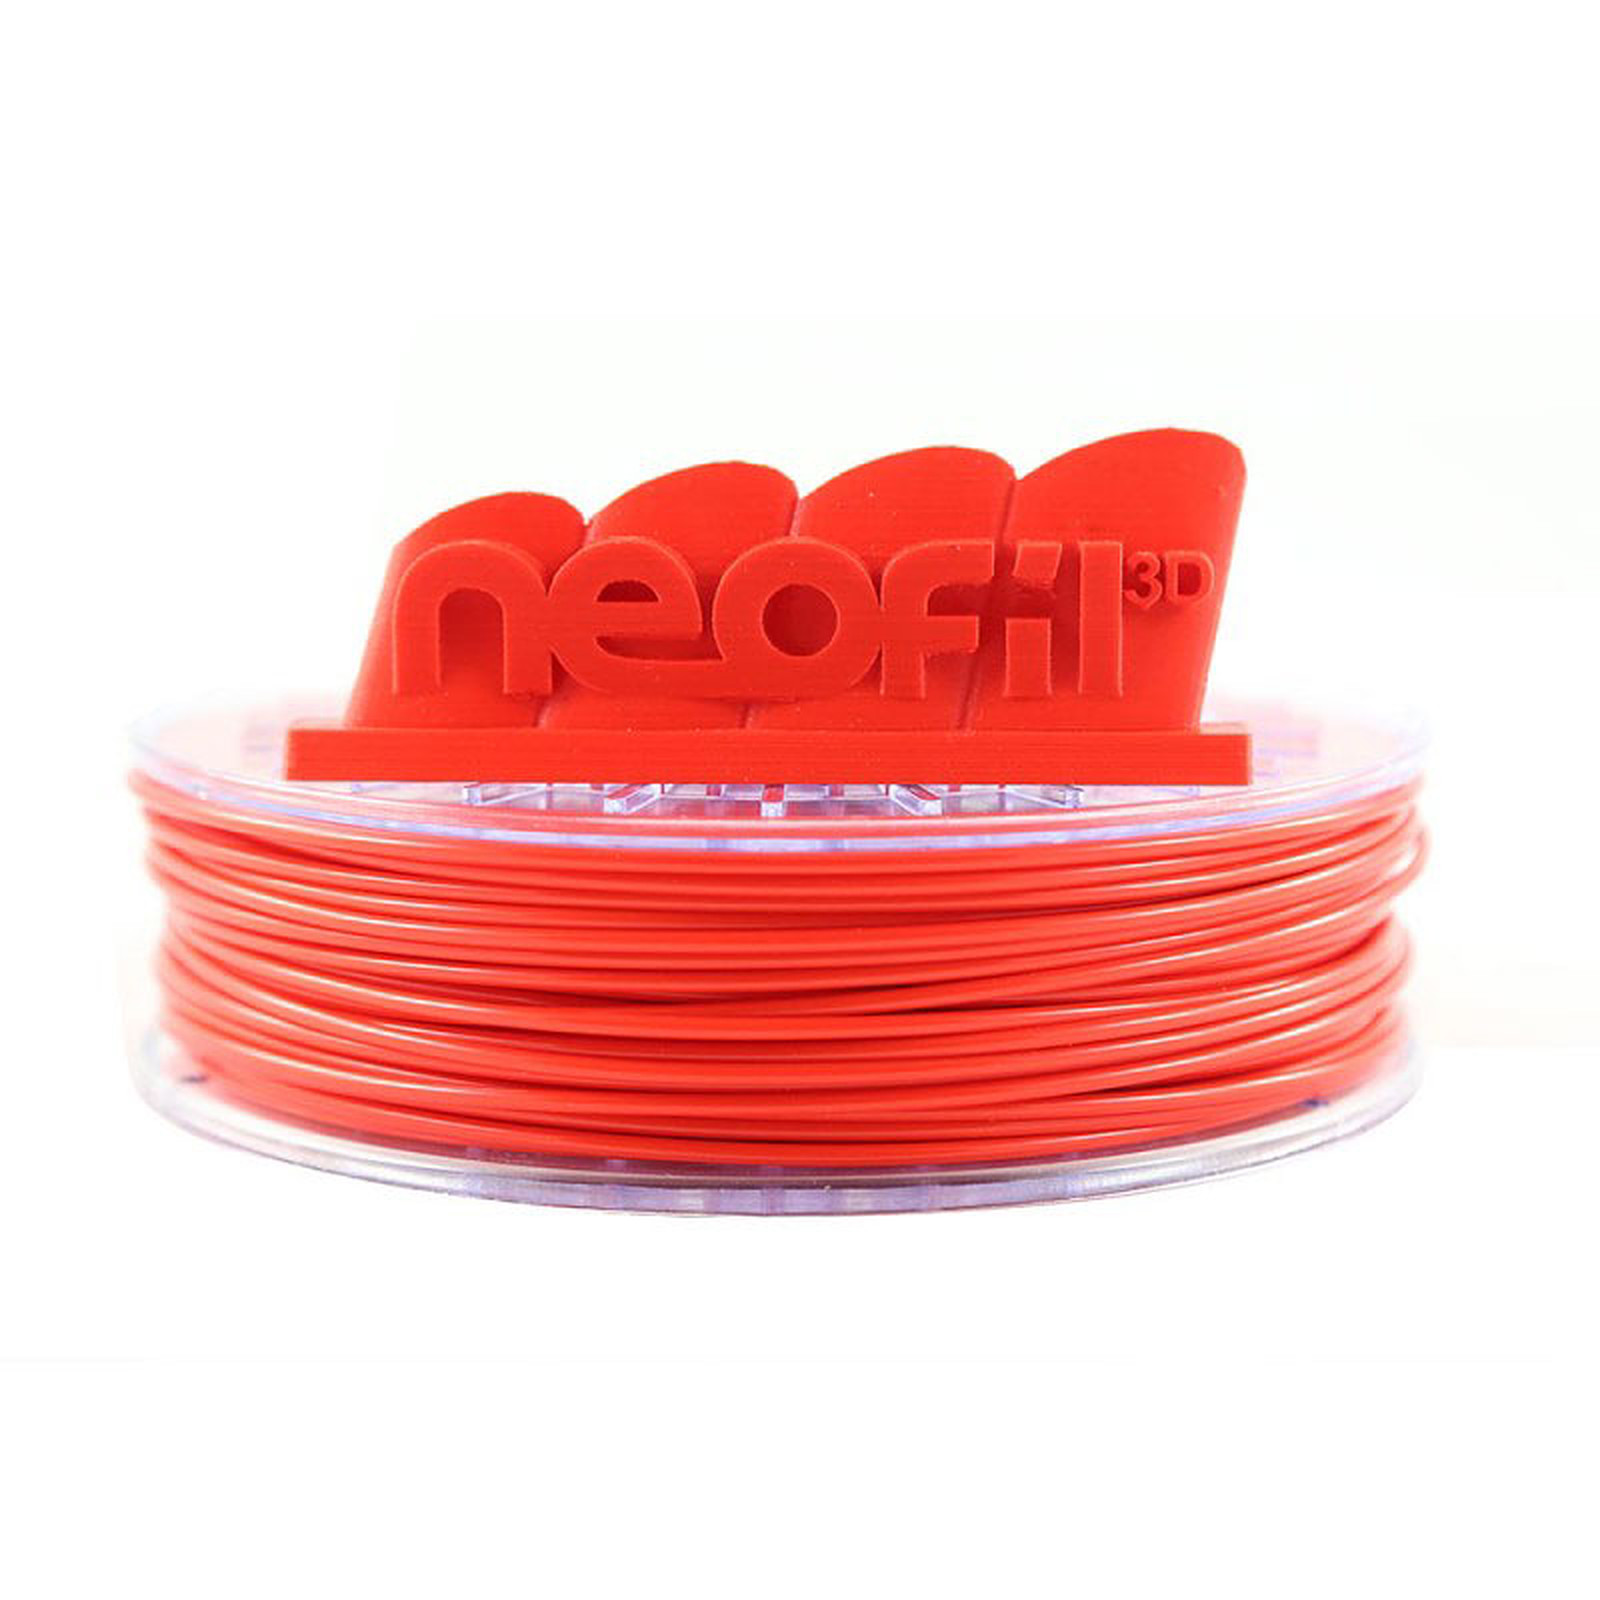 Neofil3D Bobine PLA 1.75mm 750g - Rouge - Filament 3D Neofil3D